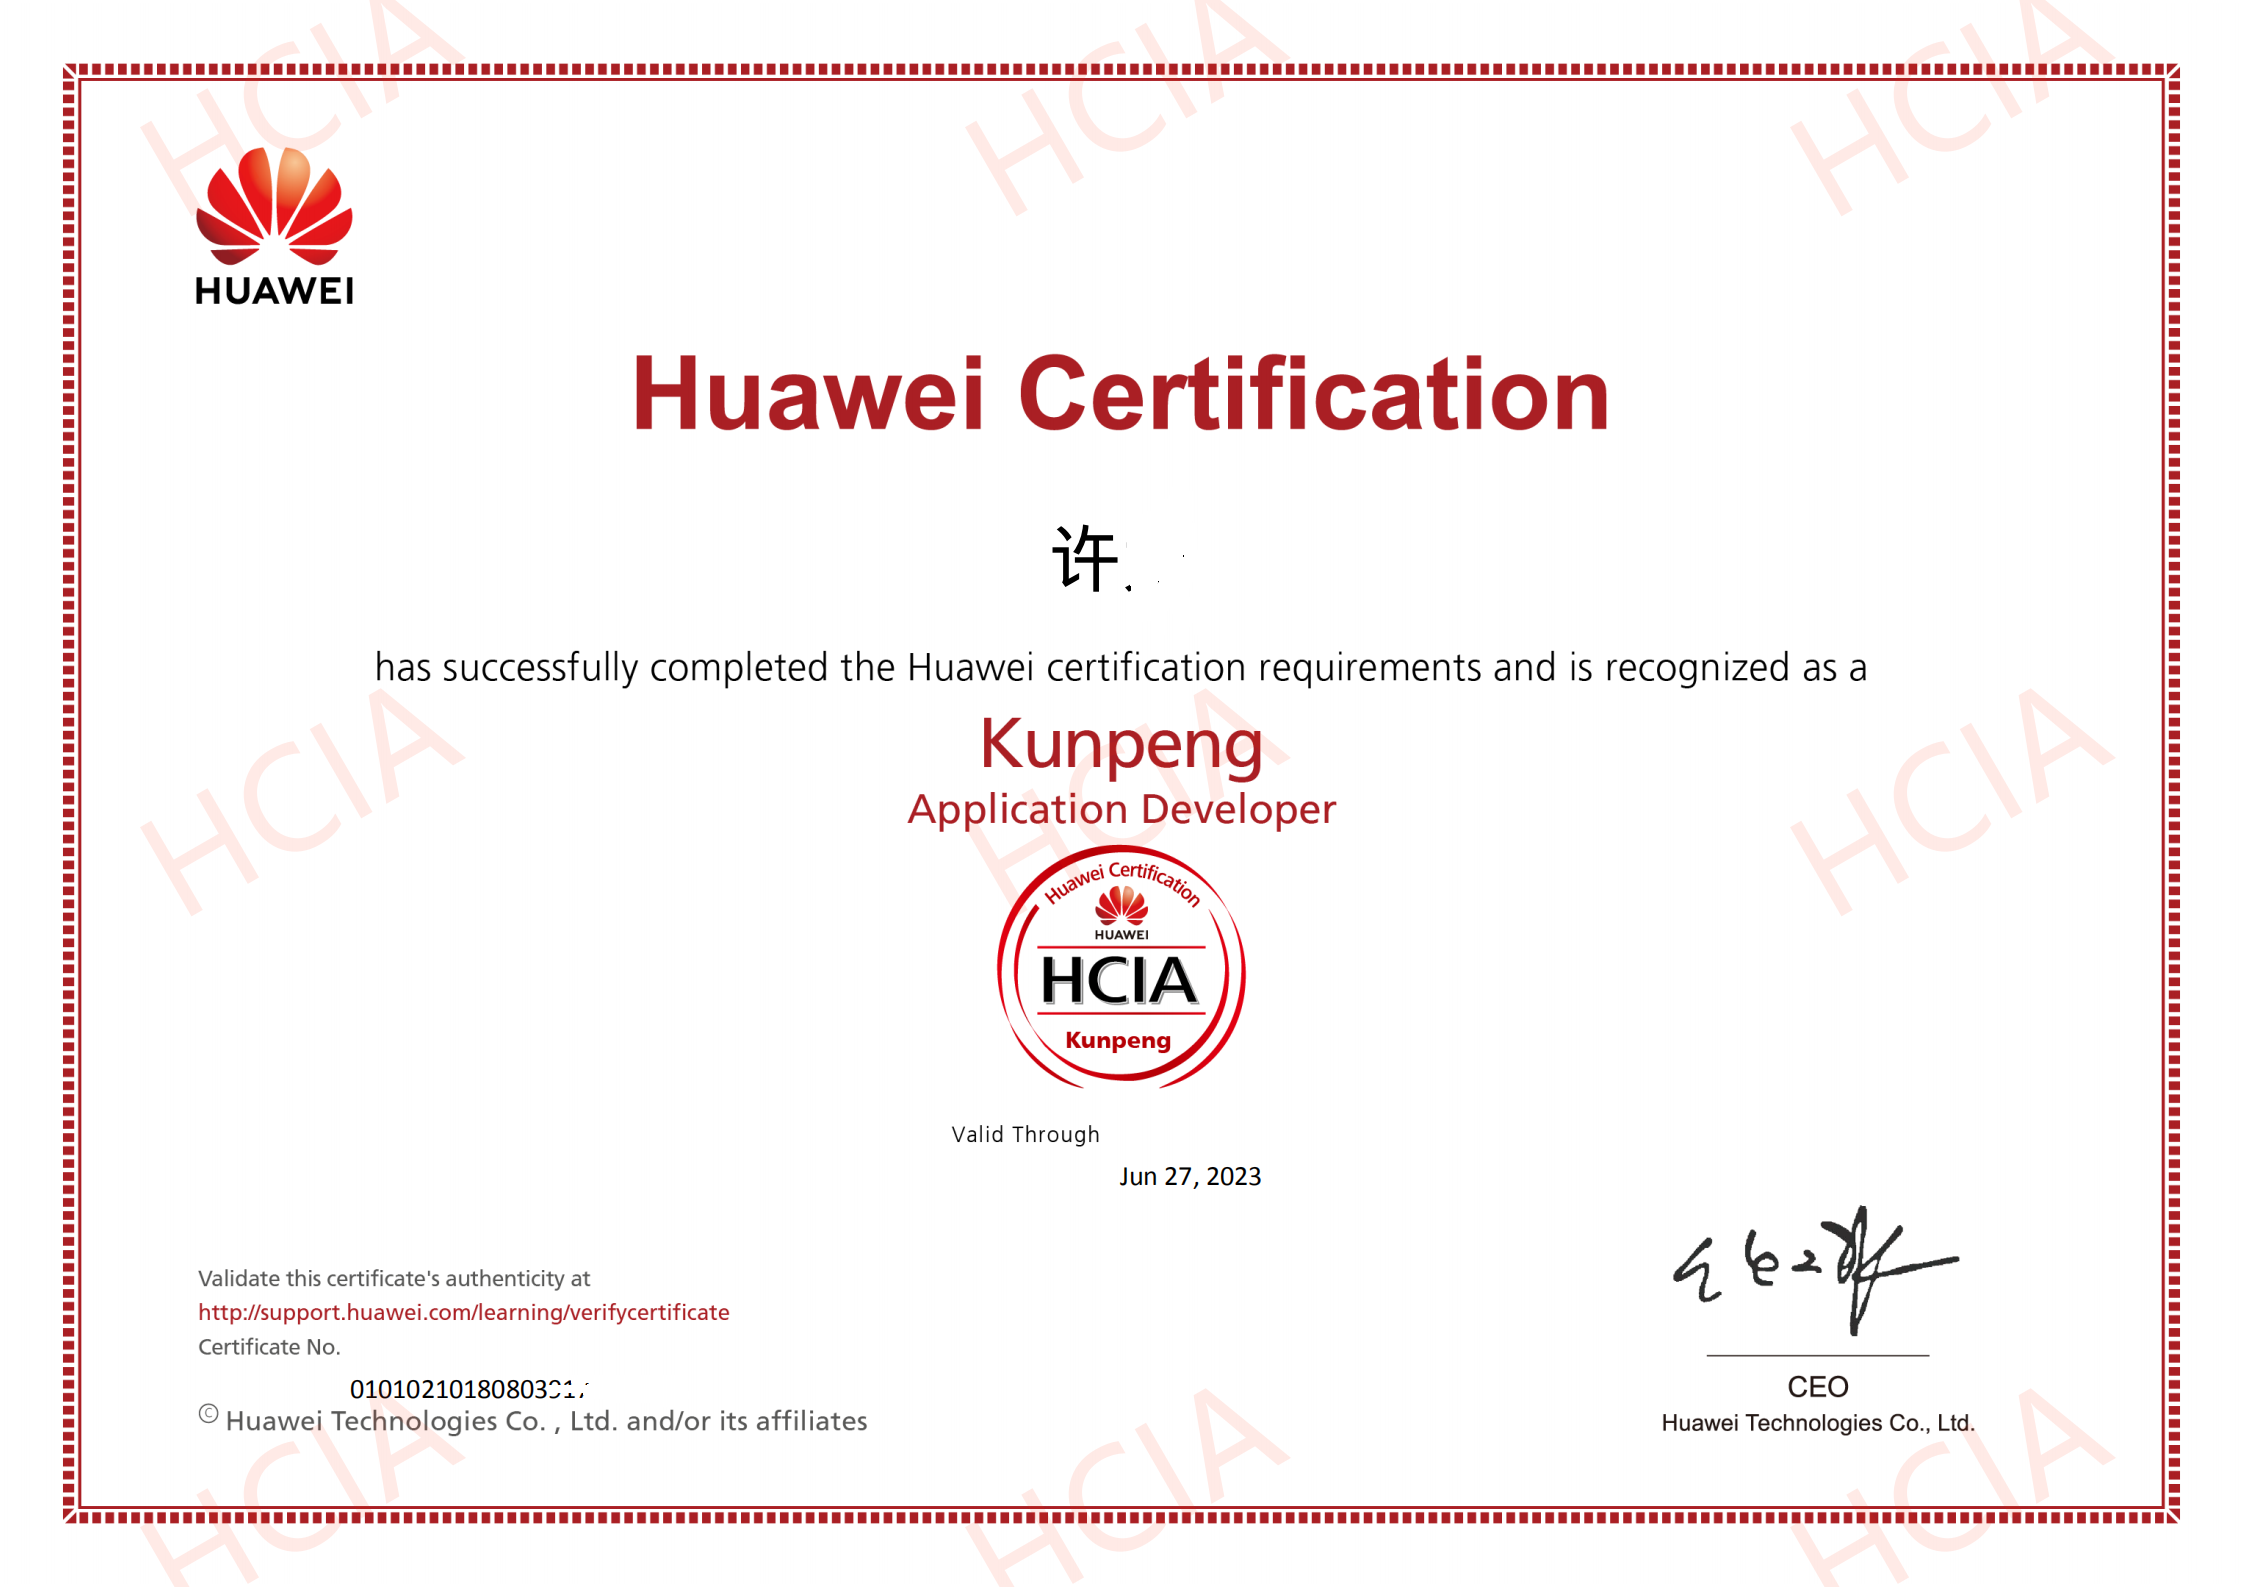 HCIA-Kunpeng_00.png